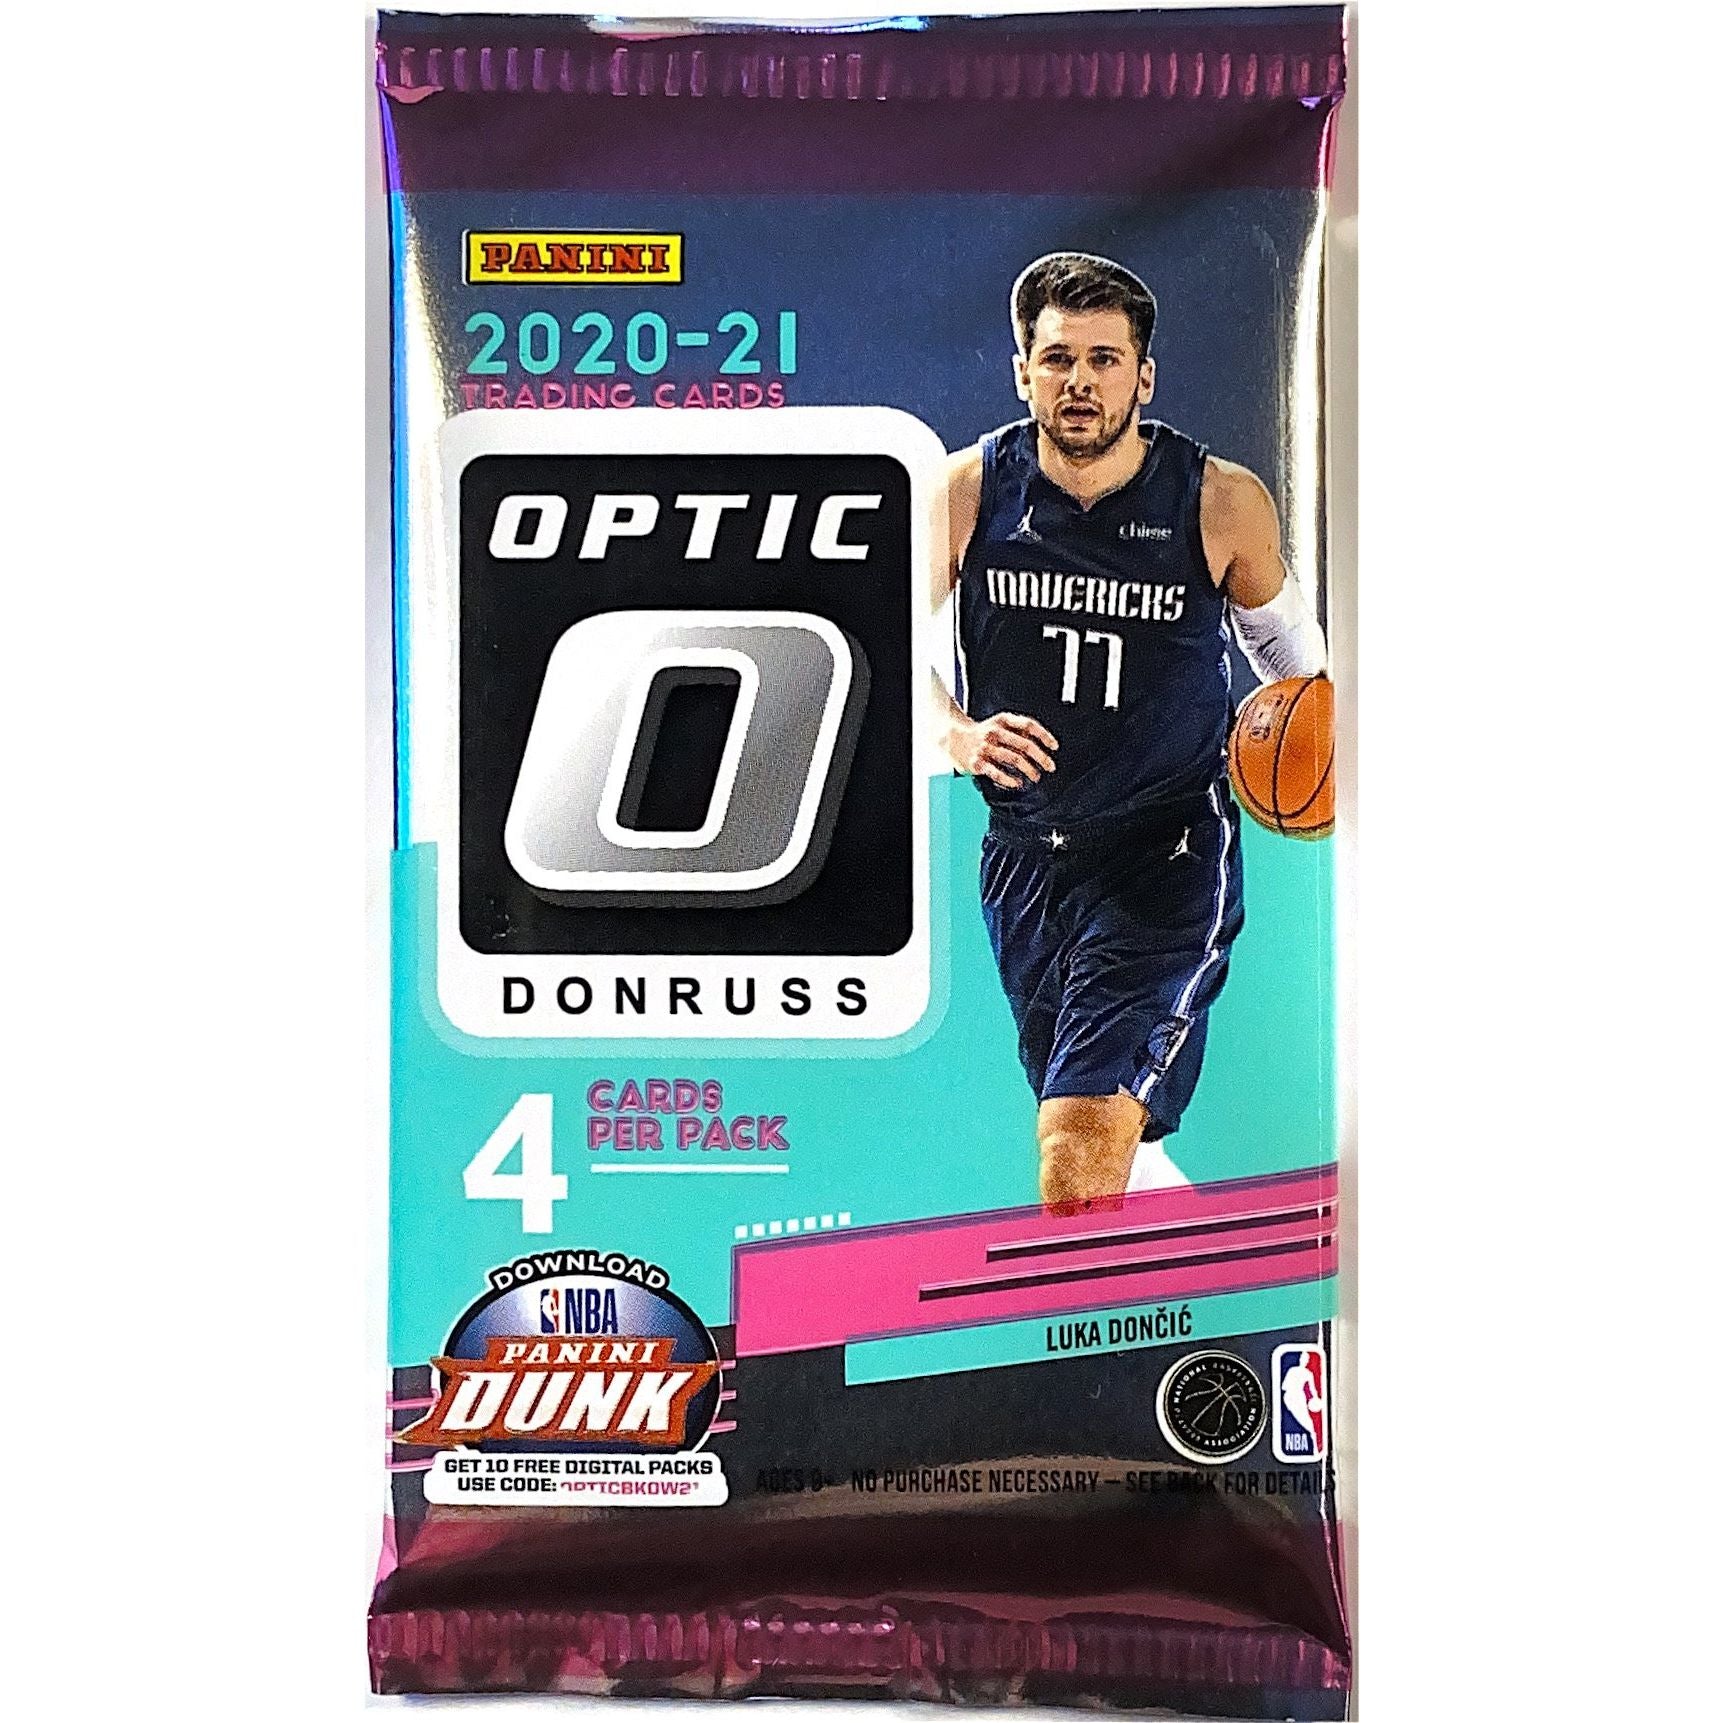  2020-21 Panini Donruss Optic NBA Basketball Retail Pack  Local Legends Cards & Collectibles